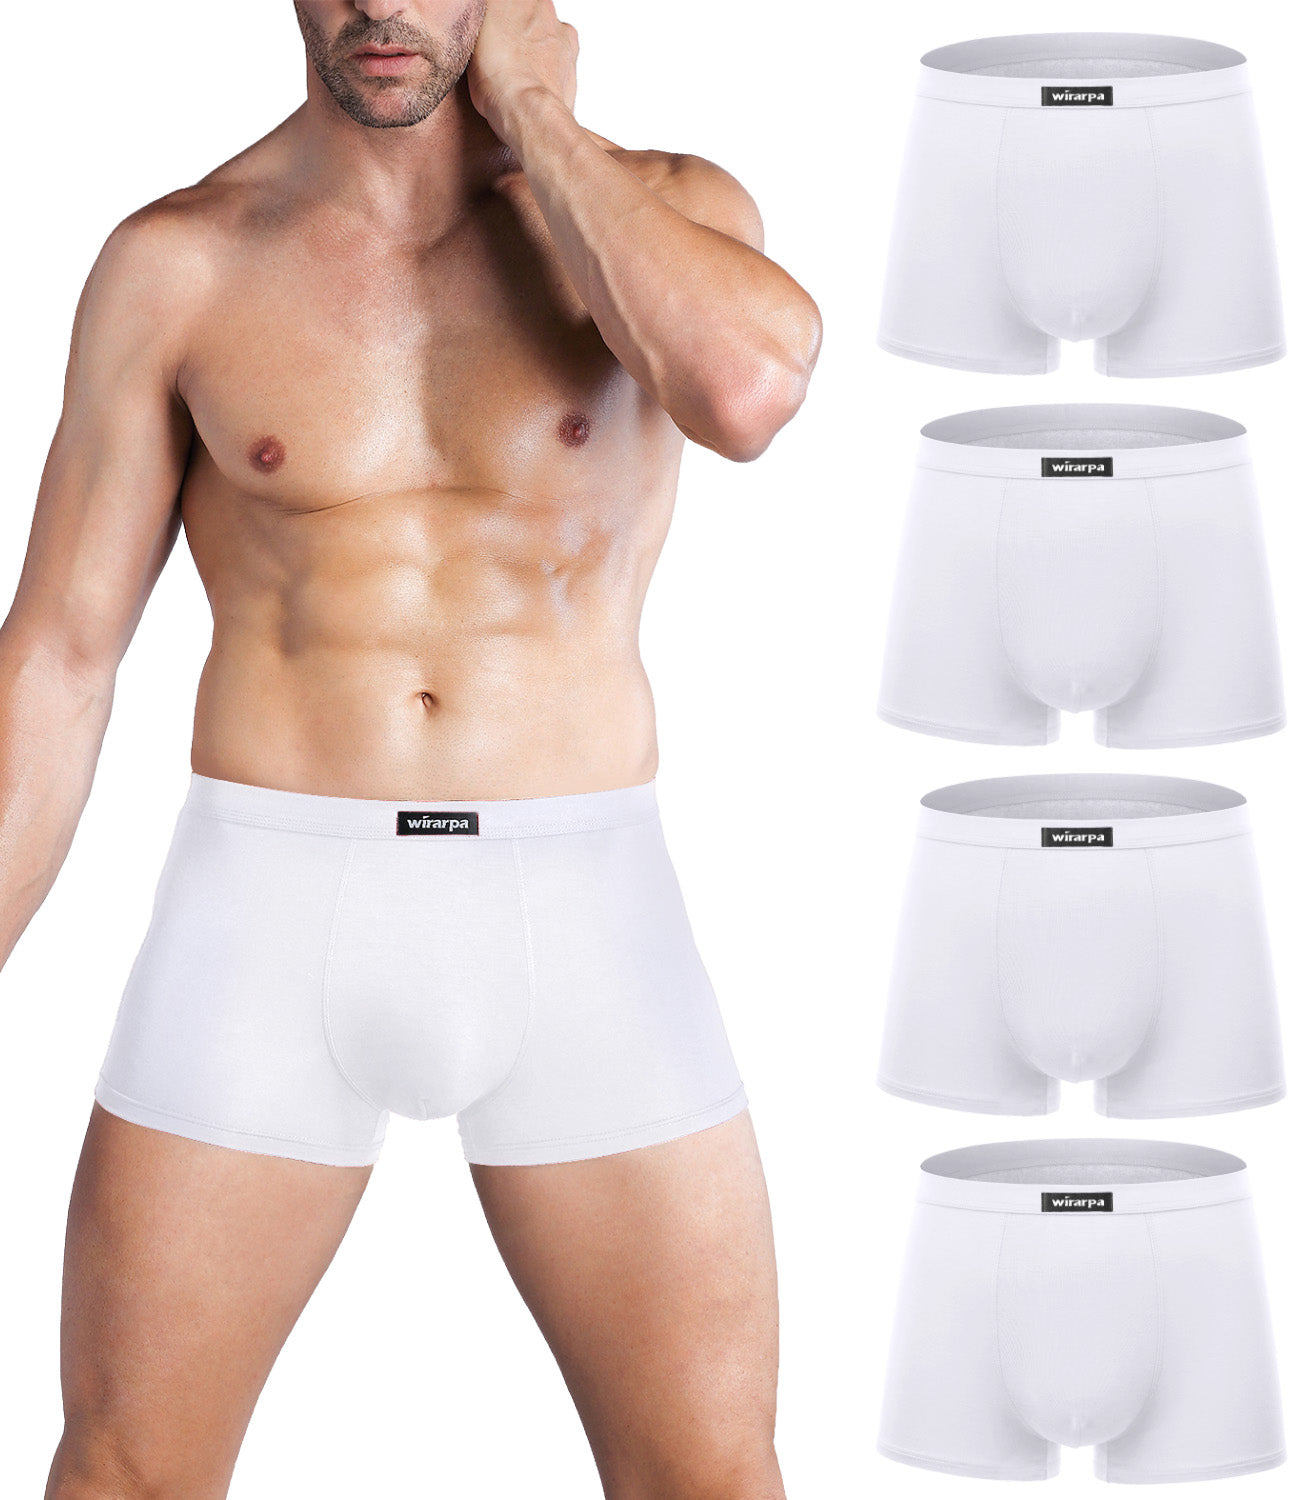 wirarpa Men’s Breathable Viscose Trunk Underwear Solid 4 Pack